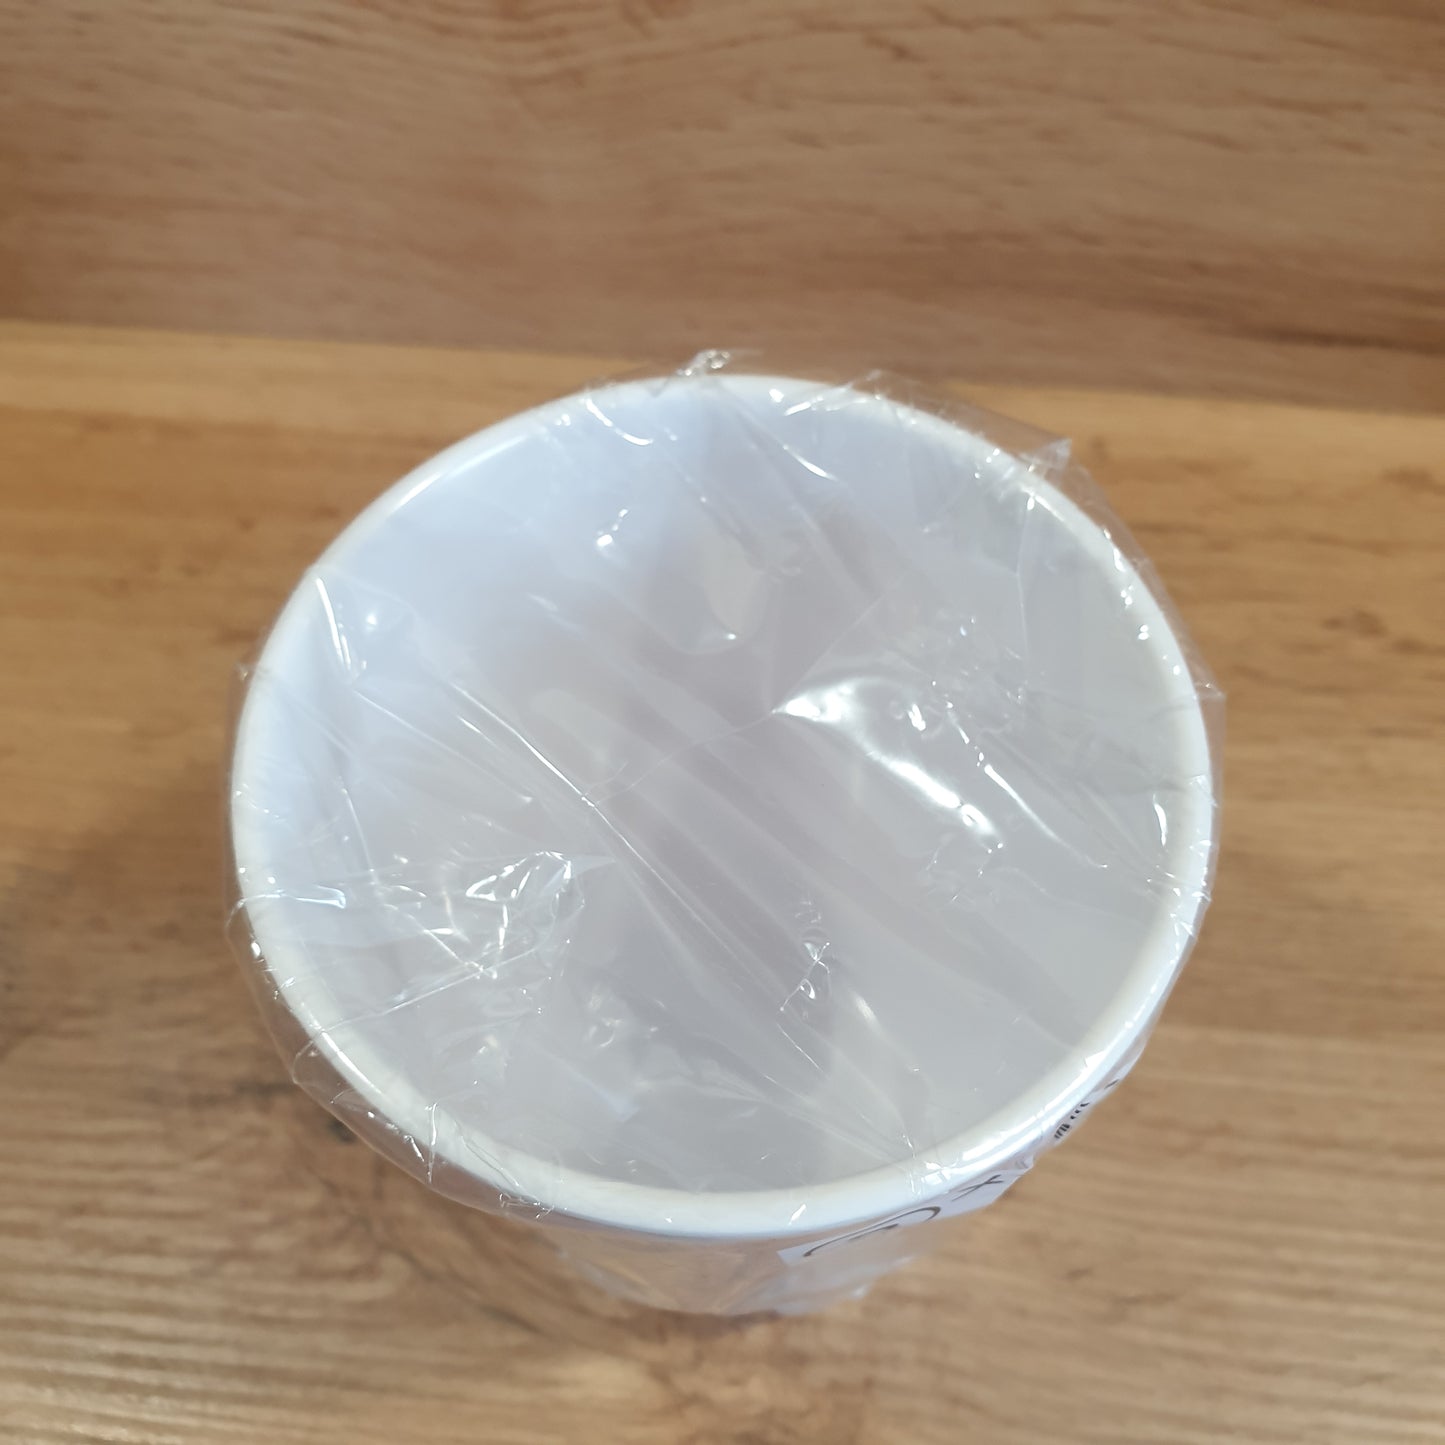 Sanrio Cogimyun Plastic Cup